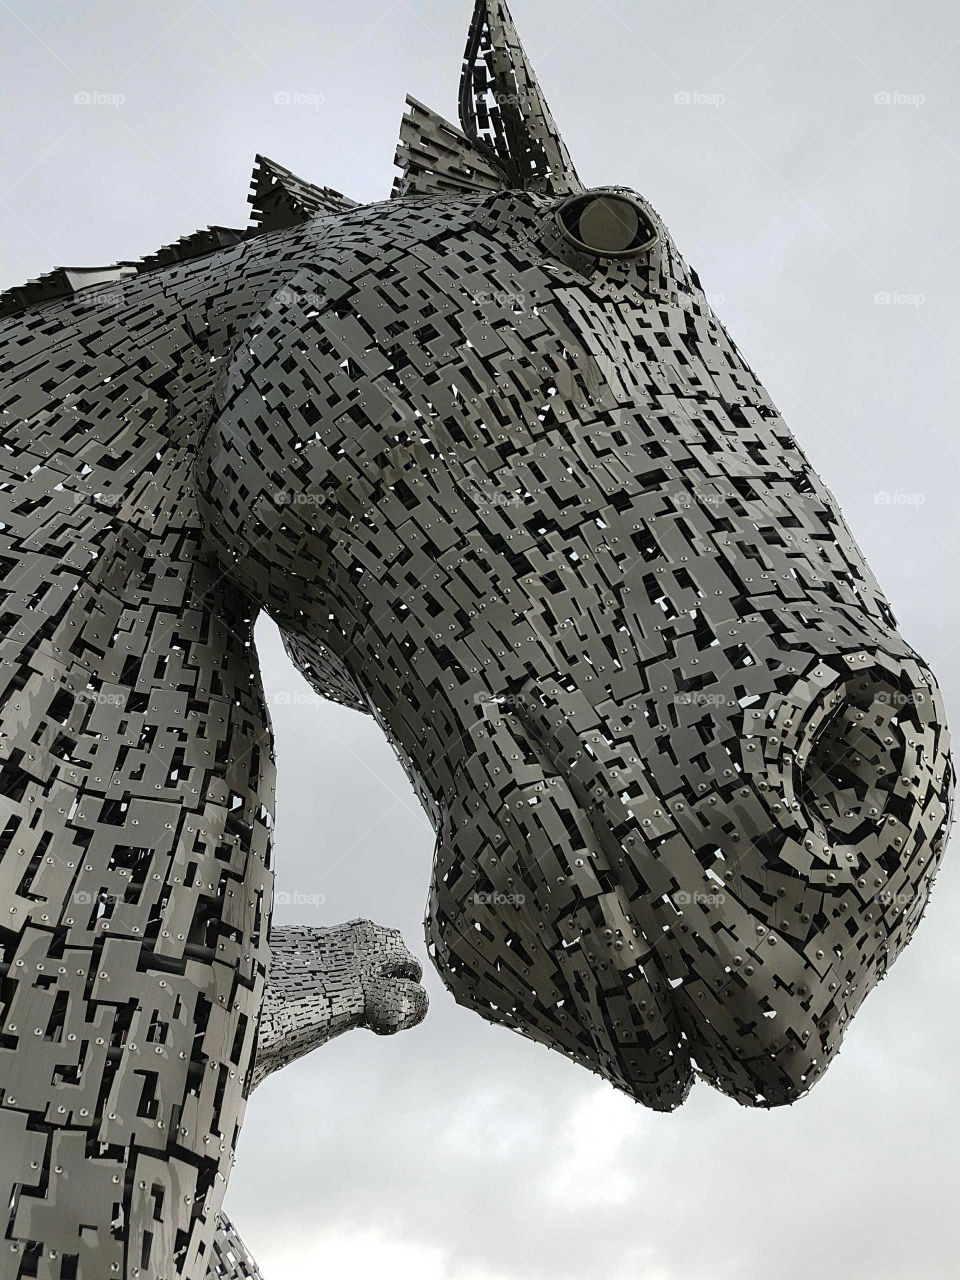 The Kelpies Horse Head Sculptures England